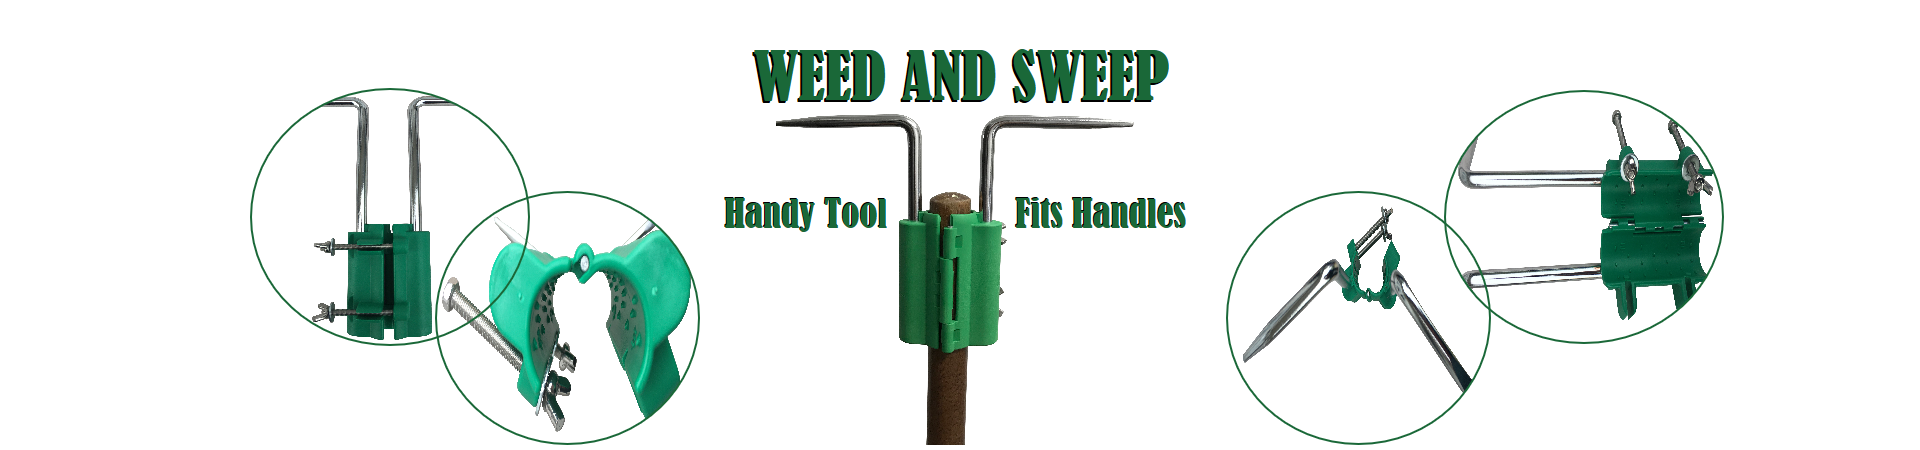 Weed and Sweep | Garden | Tool | Hook | Broom | Rake | Handle | Weeds | No Bending | No Chemicals | No Poisons | Easy | Cracks | Product | Buy